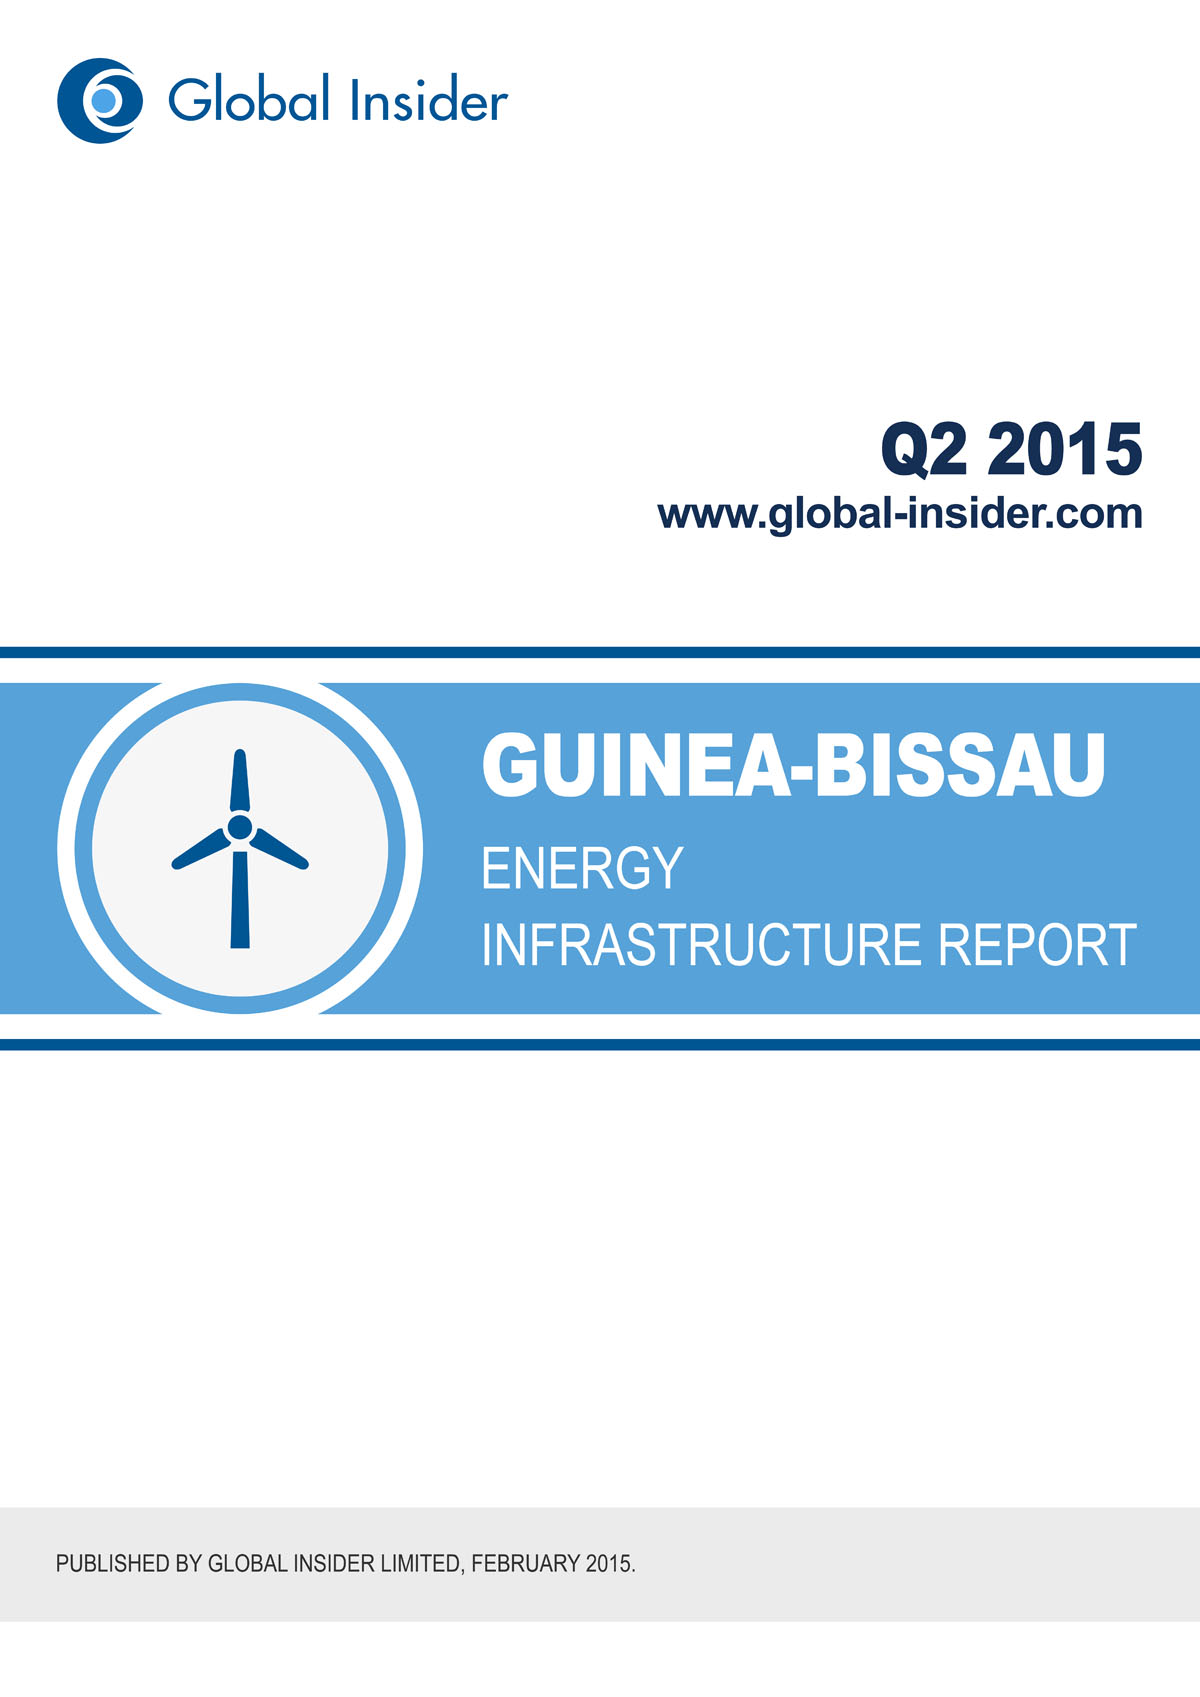 Guinea-Bissau Energy Infrastructure Report